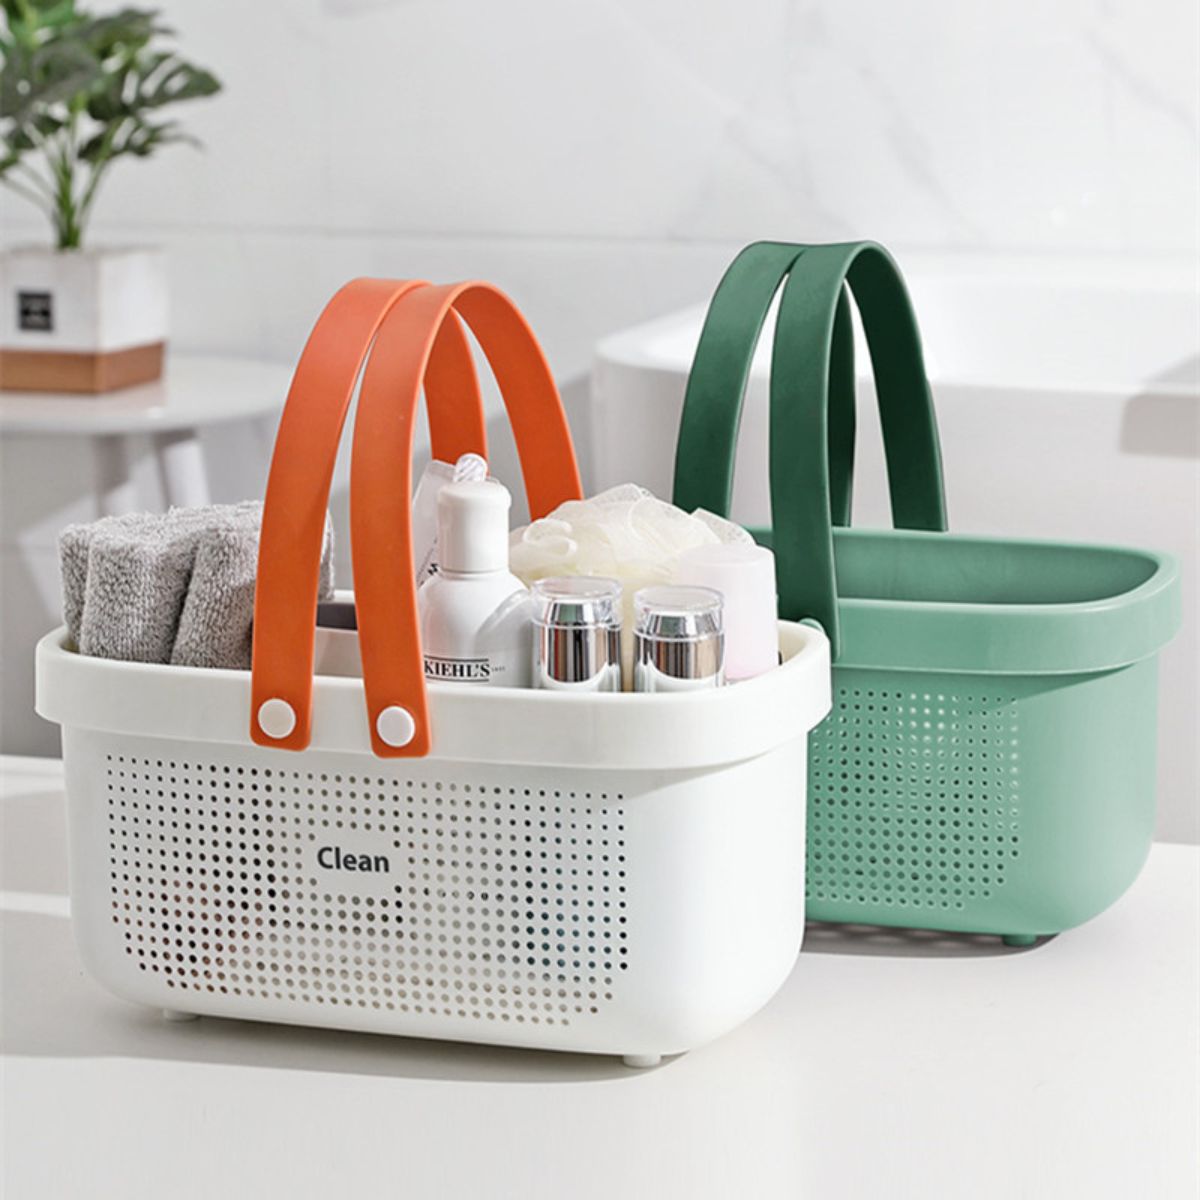 Clean - Plastic Storage Basket - Small